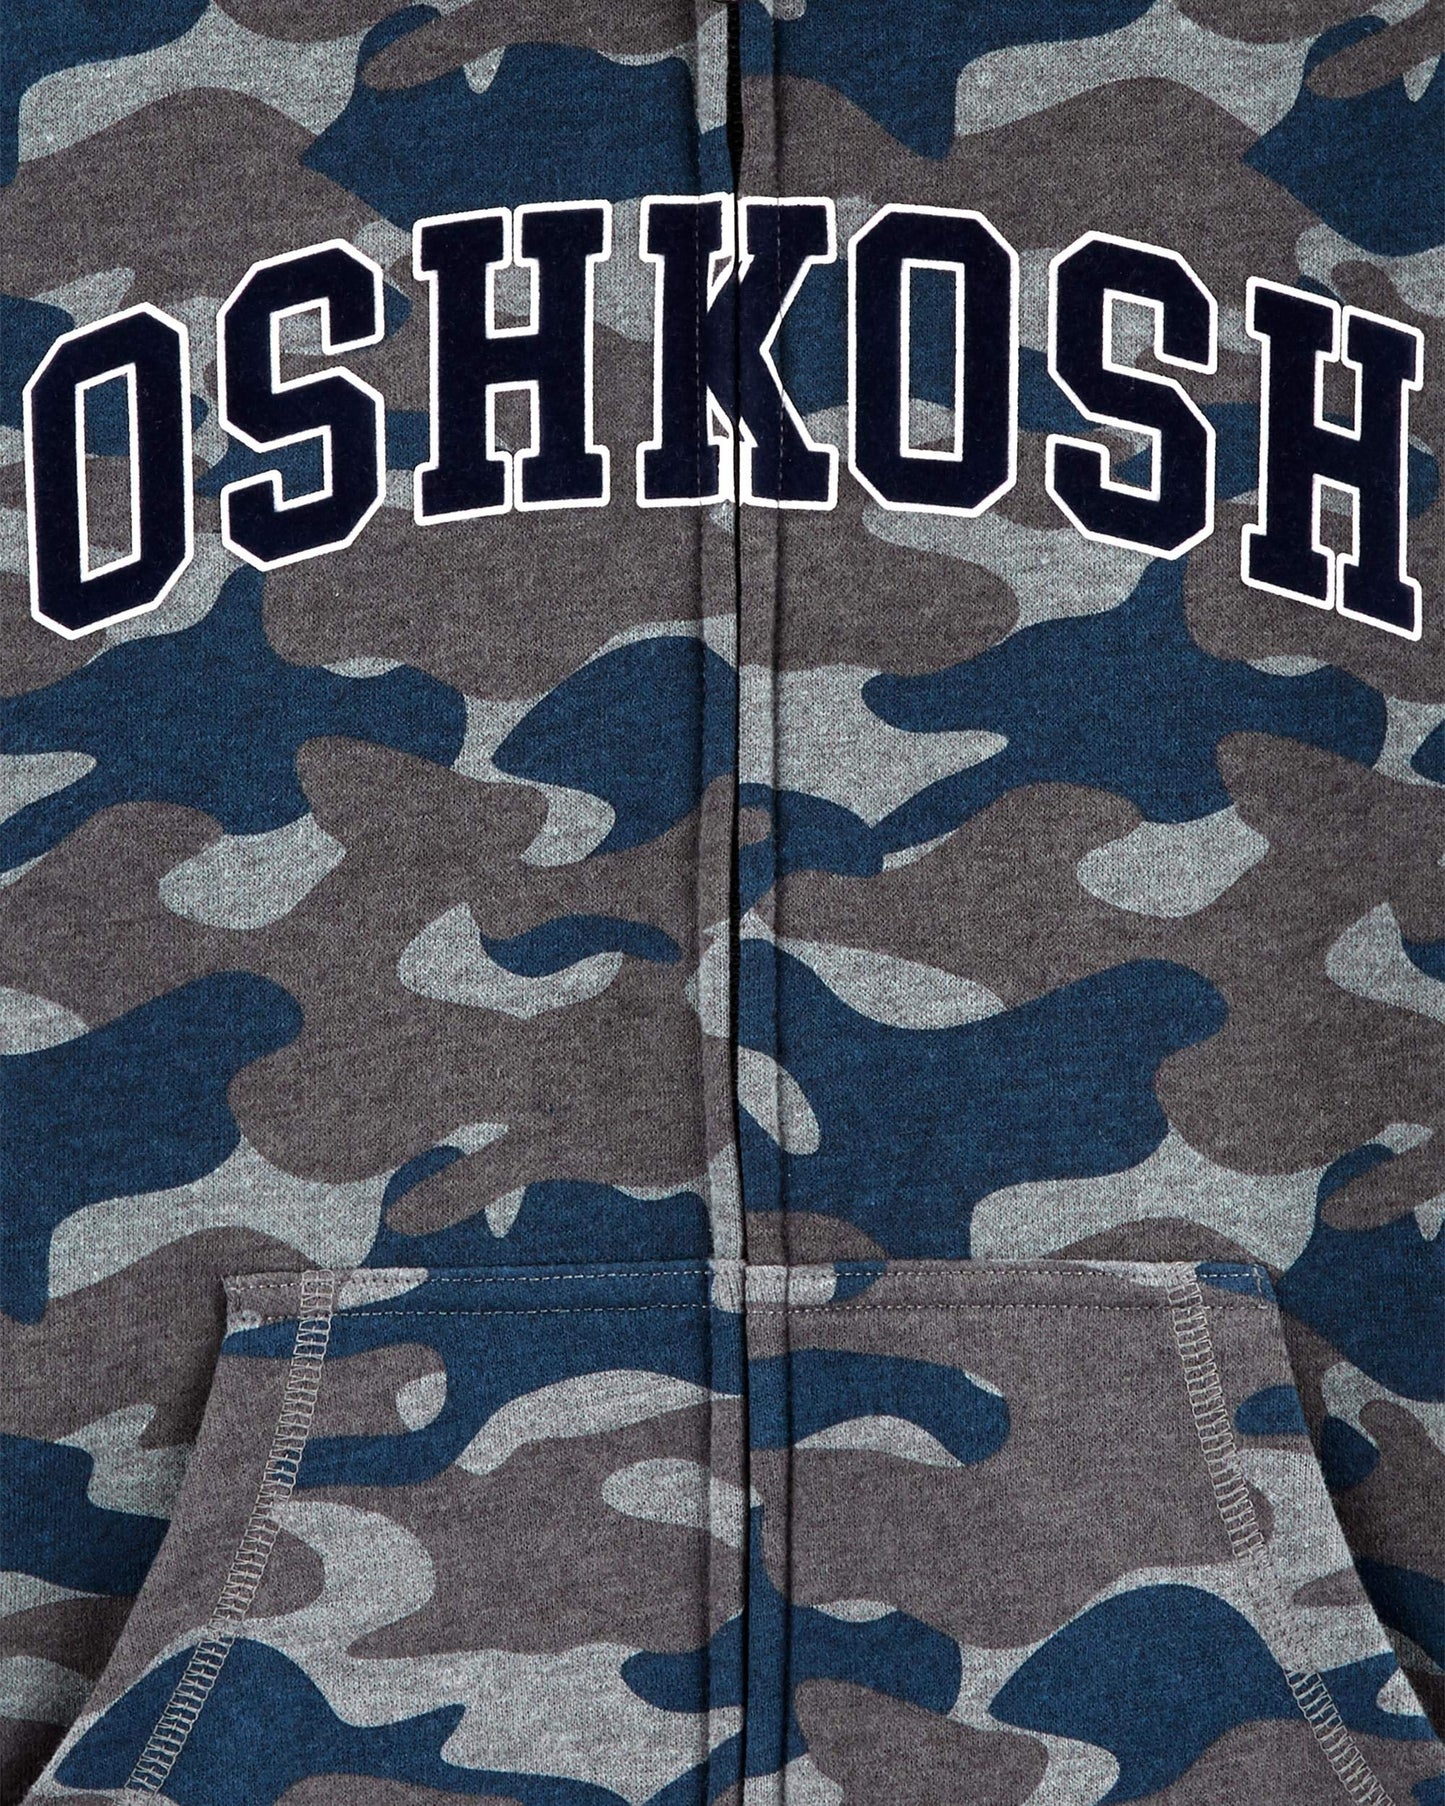 OshKosh B'gosh Boy's Boys' Full Zip Logo Hoodie Hooded Sweatshirt